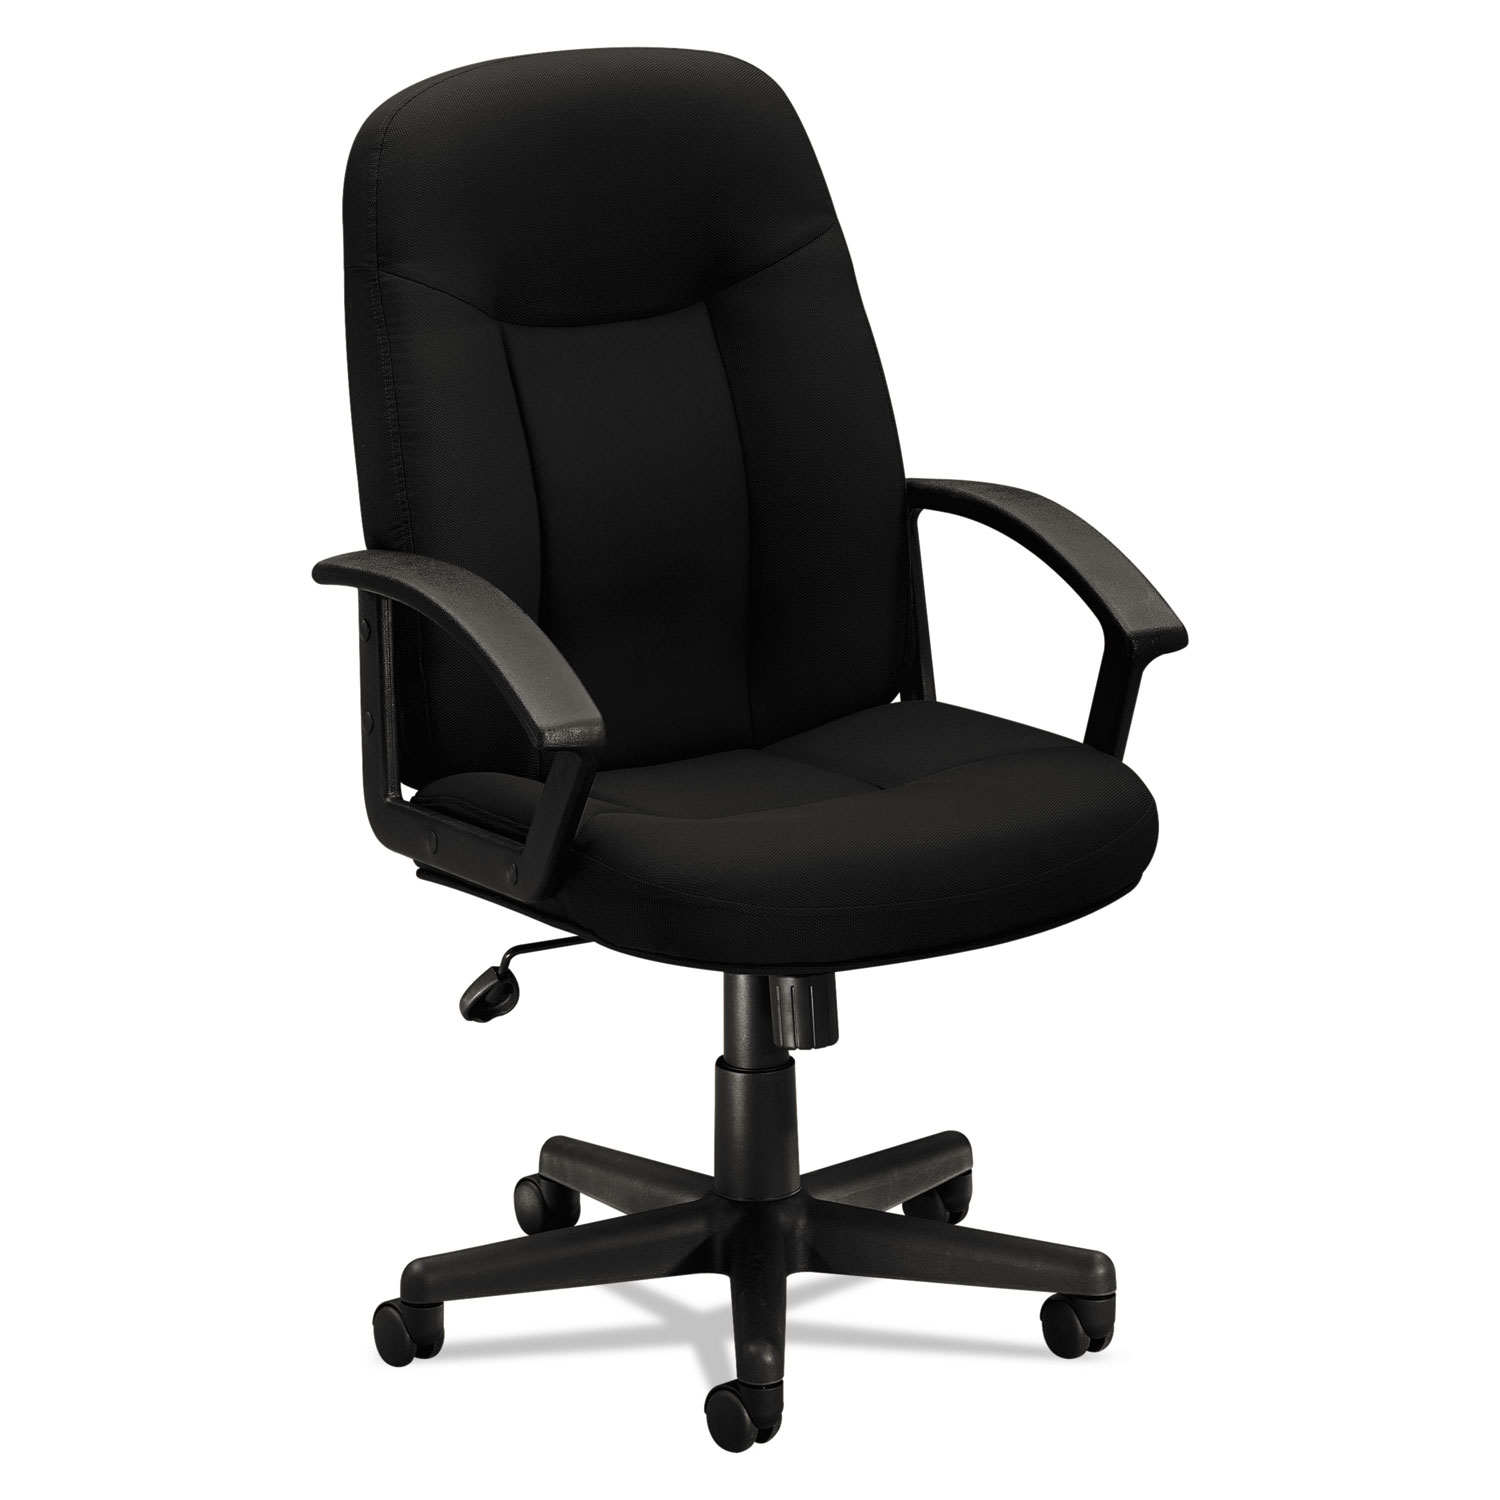  HON HVL601.VA10 HVL601 Series Executive High-Back Chair, Supports up to 250 lbs., Black Seat/Black Back, Black Base (BSXVL601VA10) 